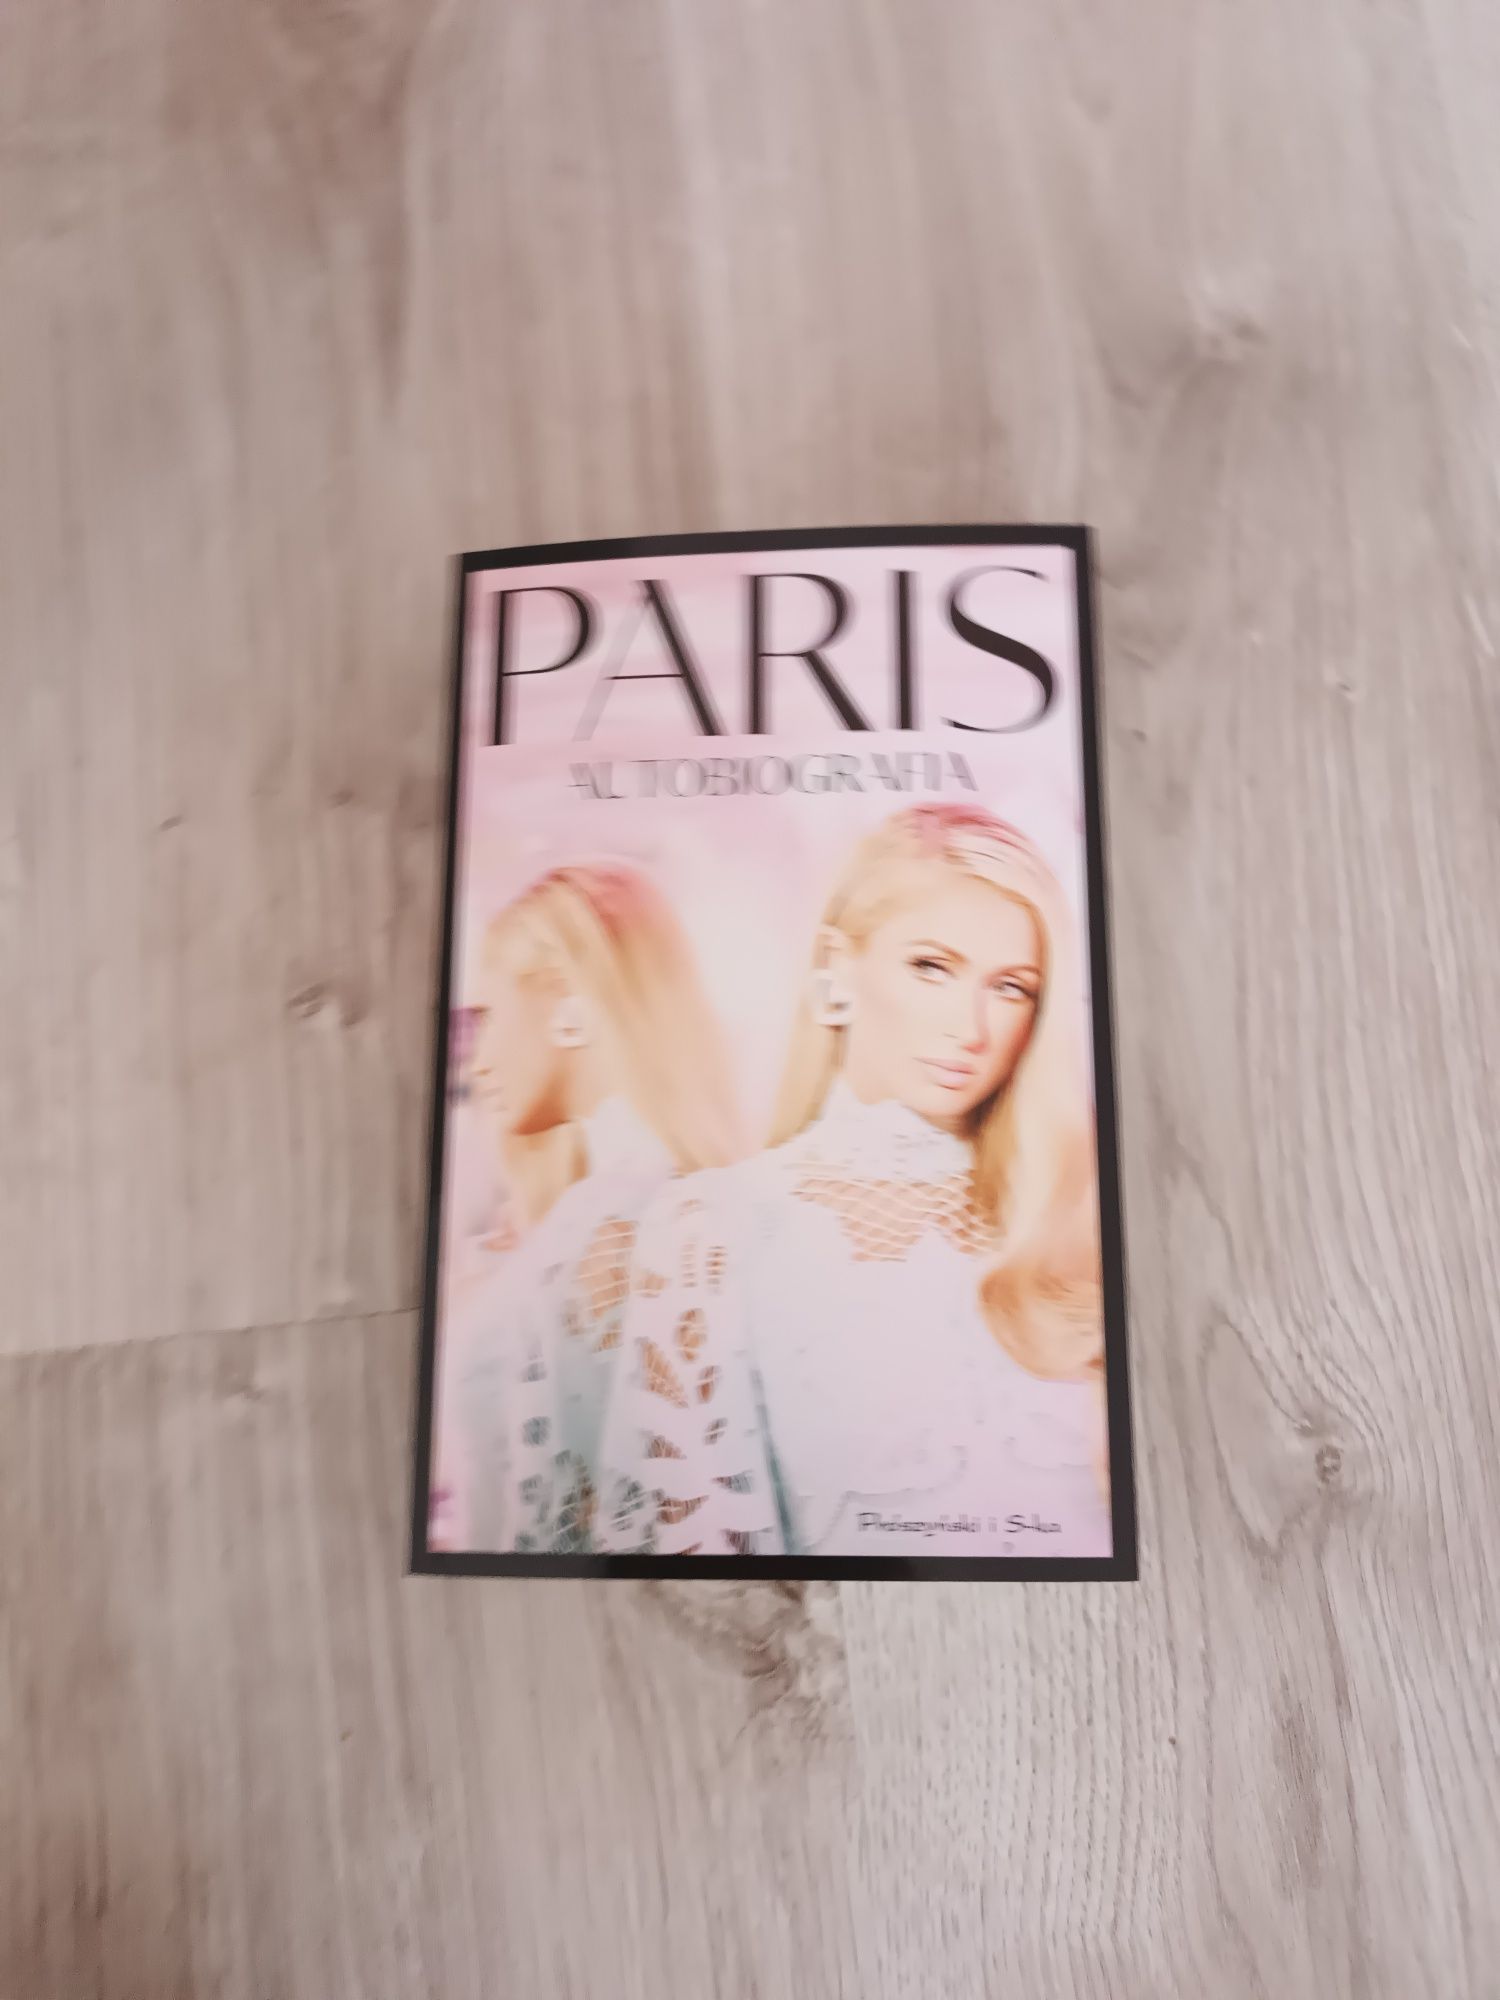 Paris Hilton autobiografia książka nowa